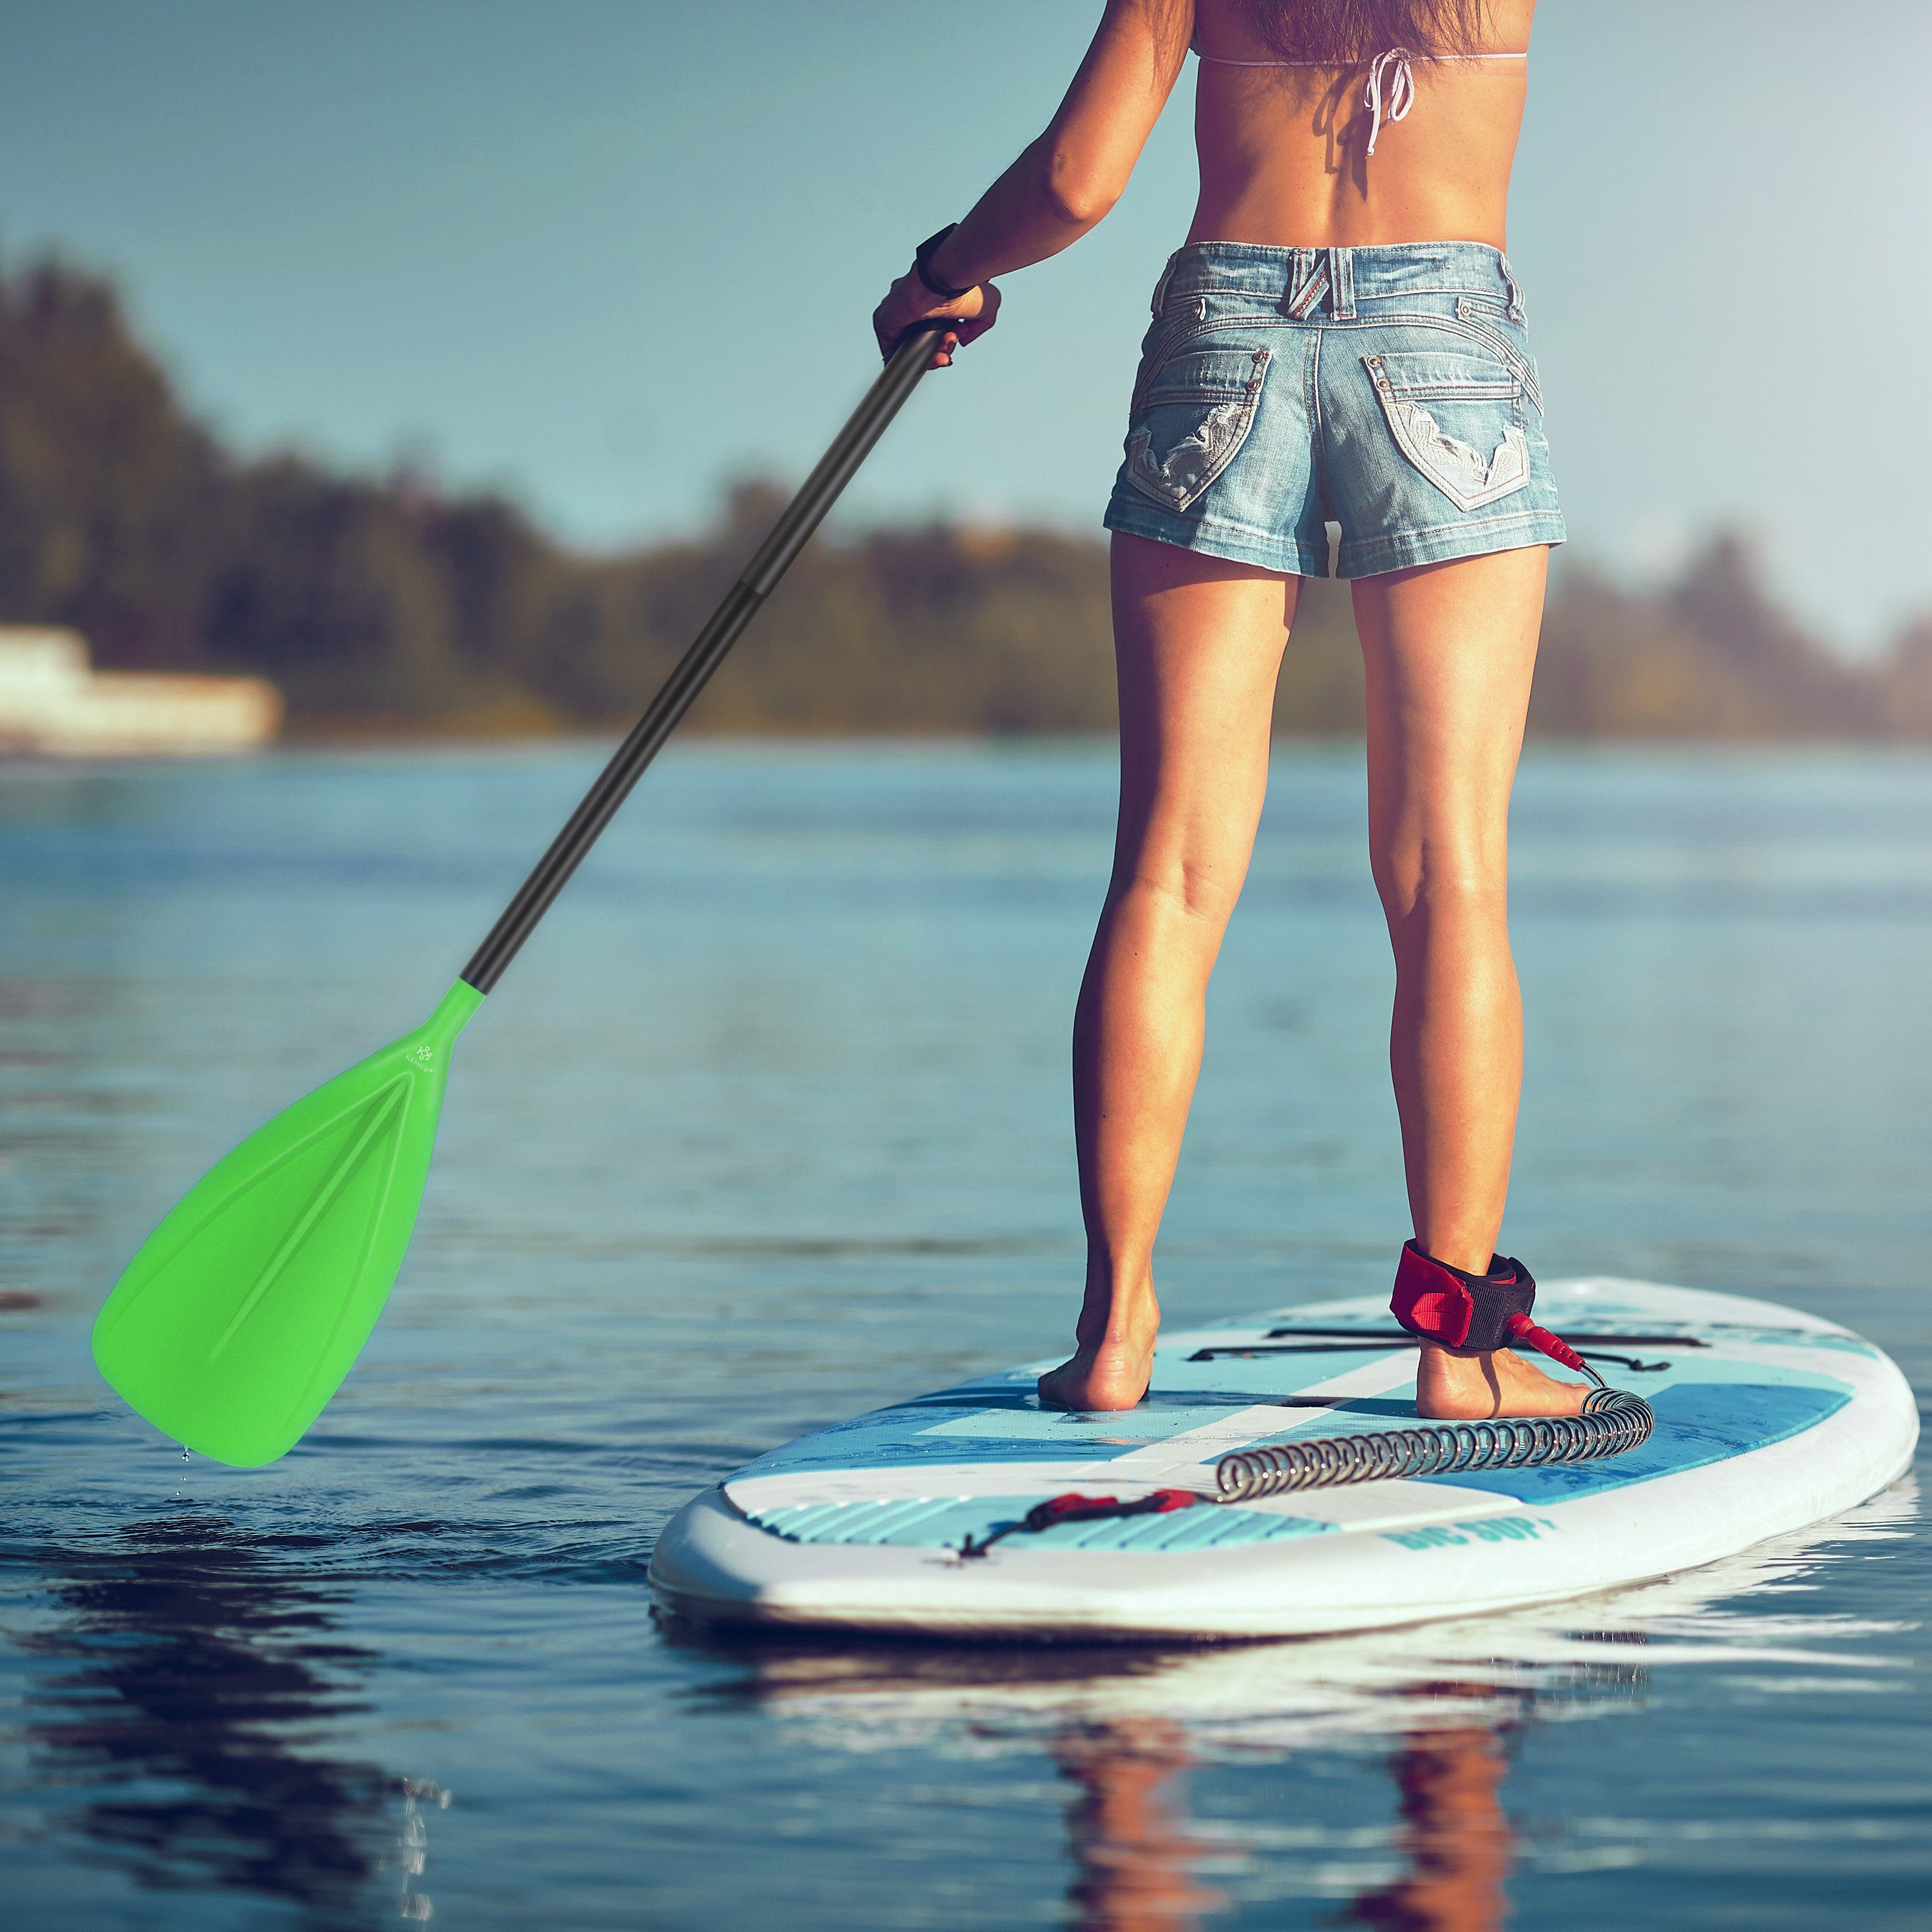 3-teilig SUP-Paddel, KESSER für Kayak Paddle SUP Stand-Up Paddling grün Board